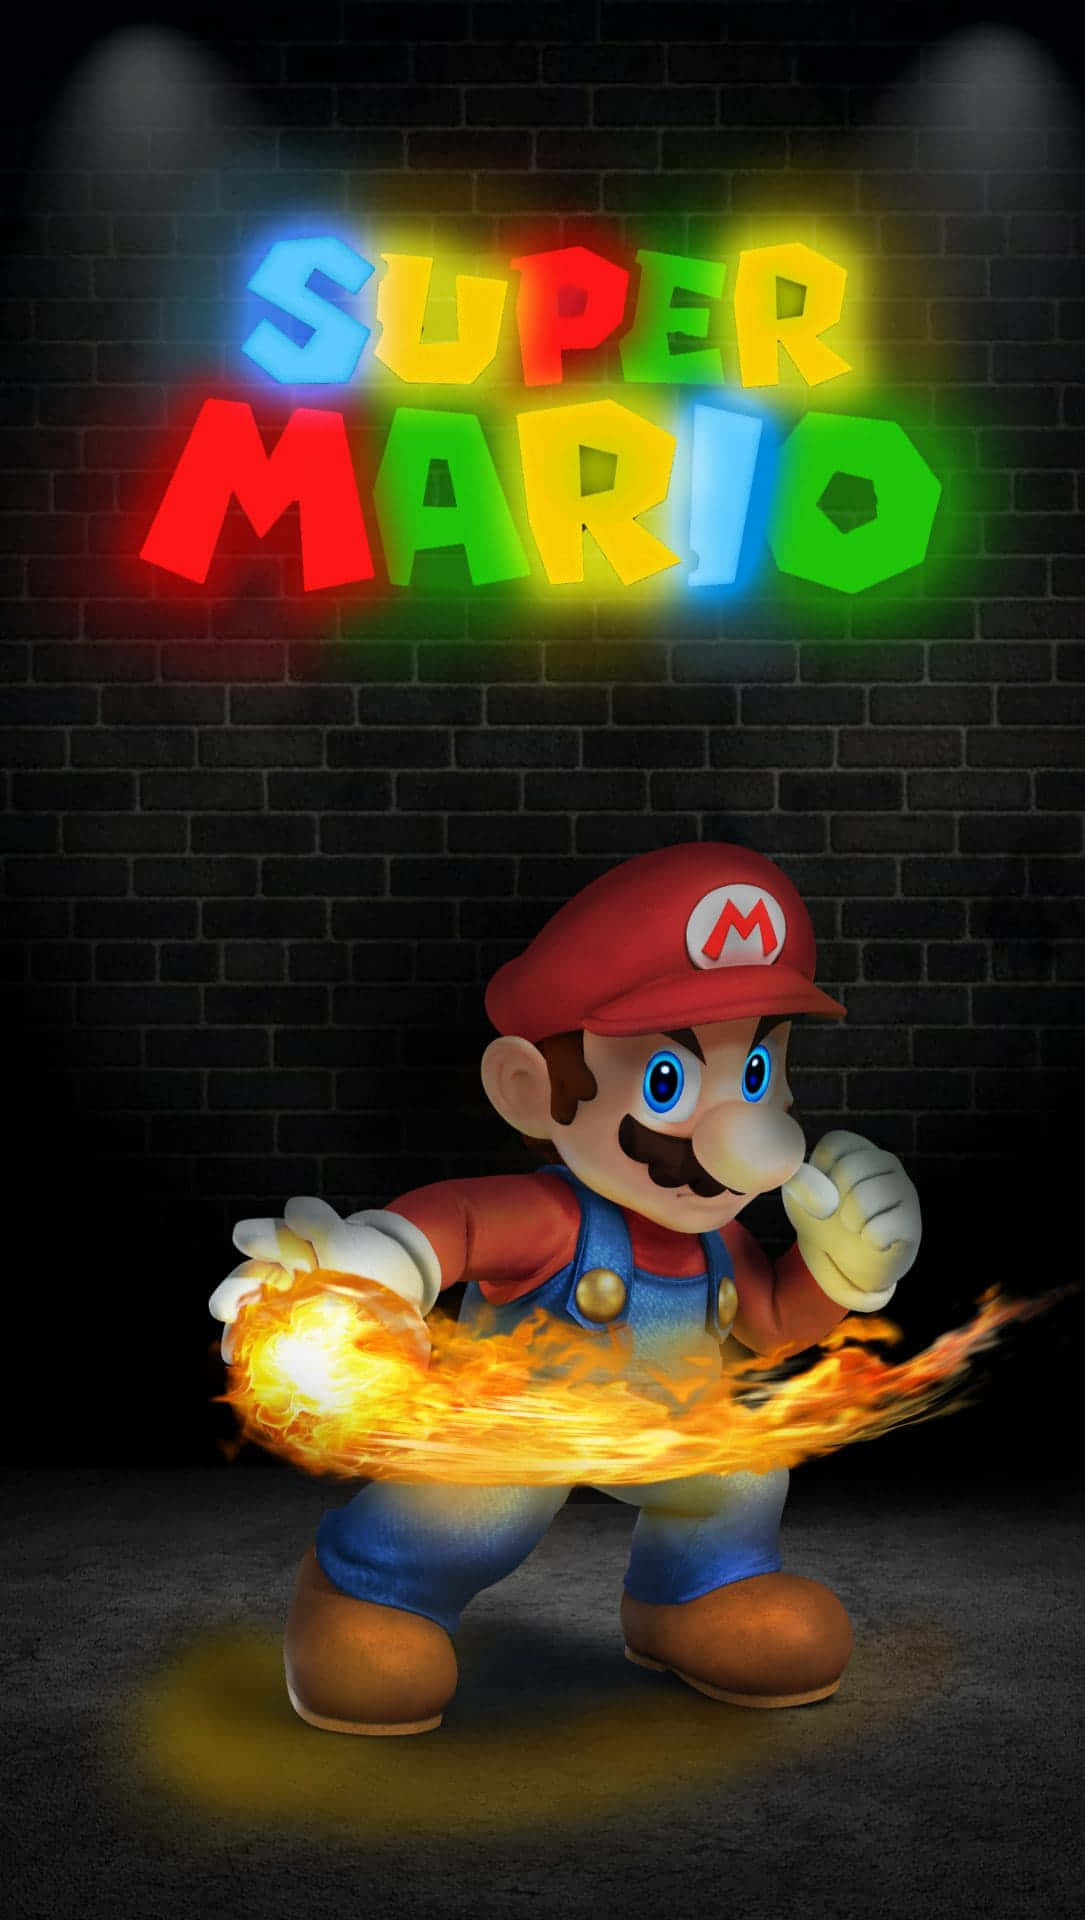 Genießeetwas Coole, Retro Gaming-freude Mit Mario! Wallpaper